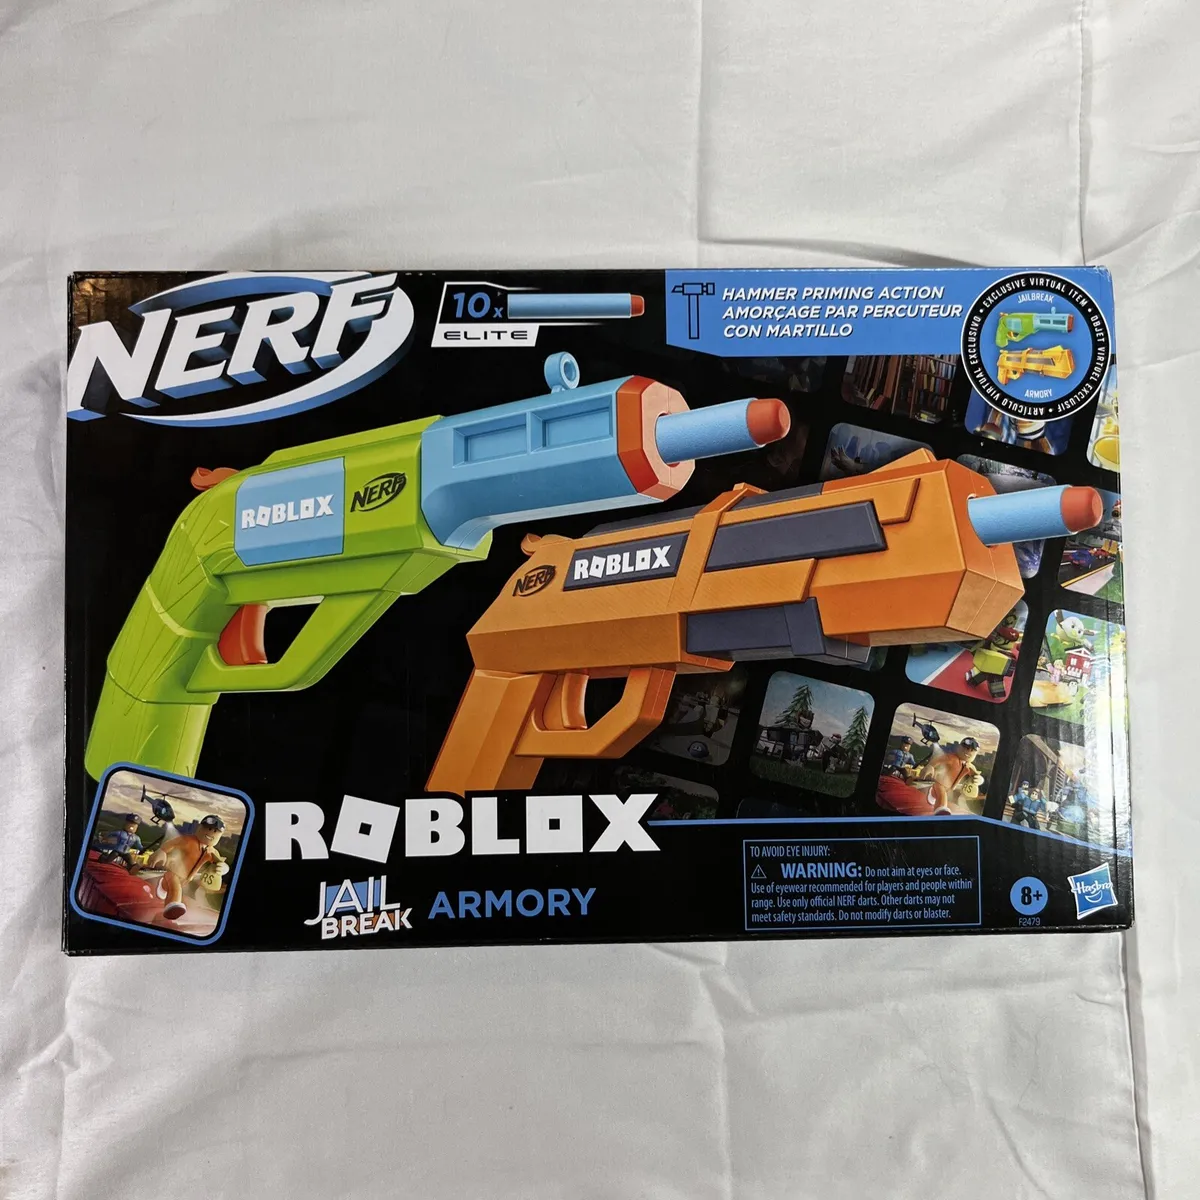 Roblox Nerf Strike New Code May 2021 